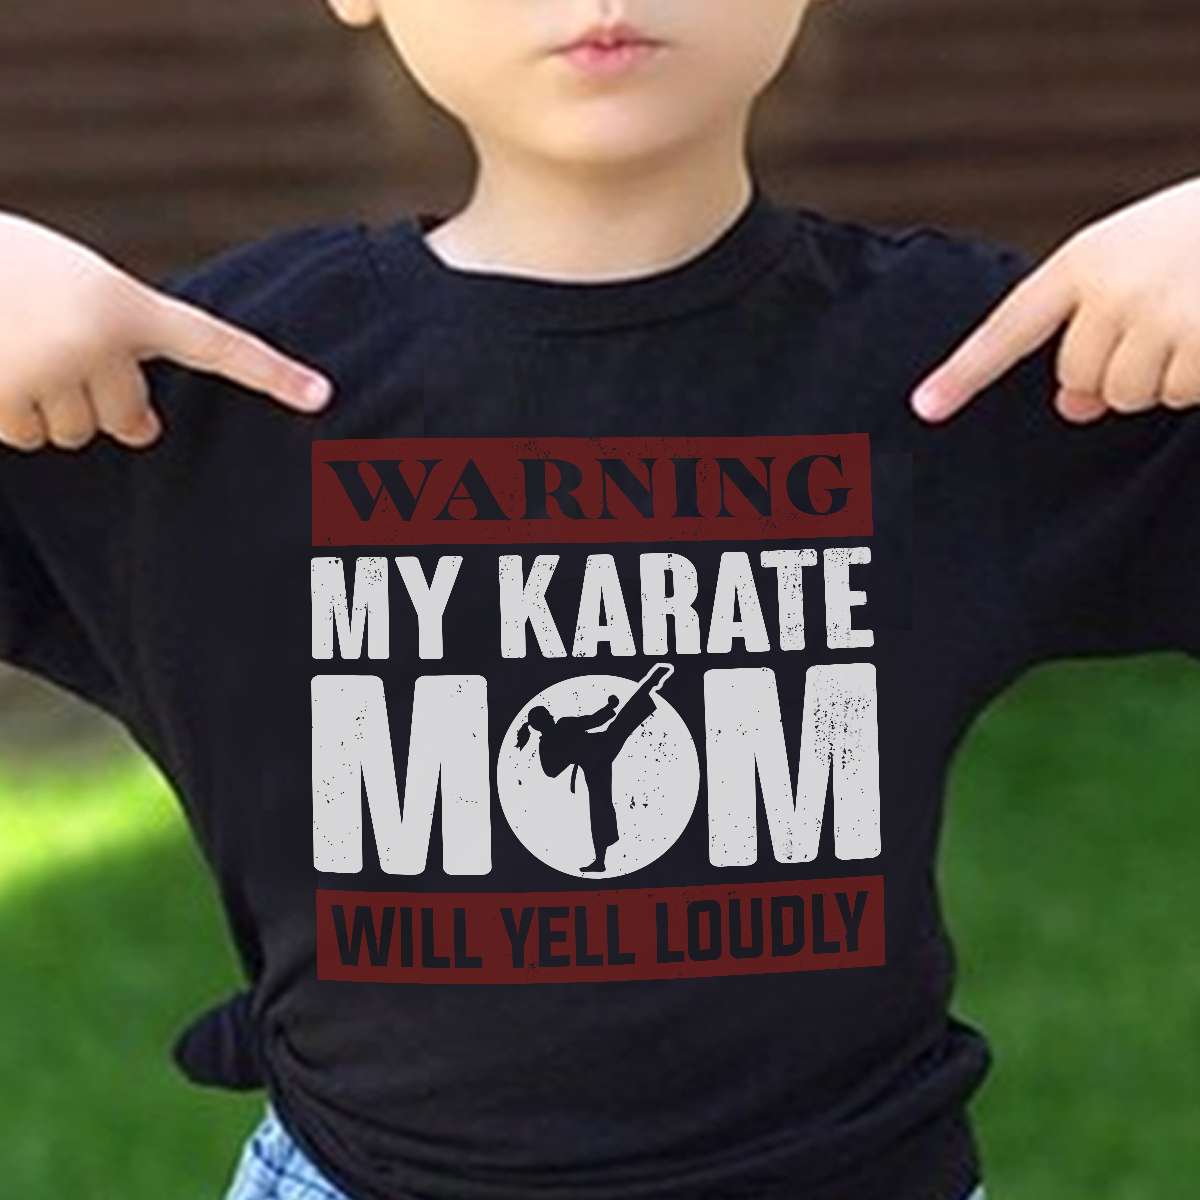 Warning my karate mom will yell loudly - Yelling karate mom, mom karate training